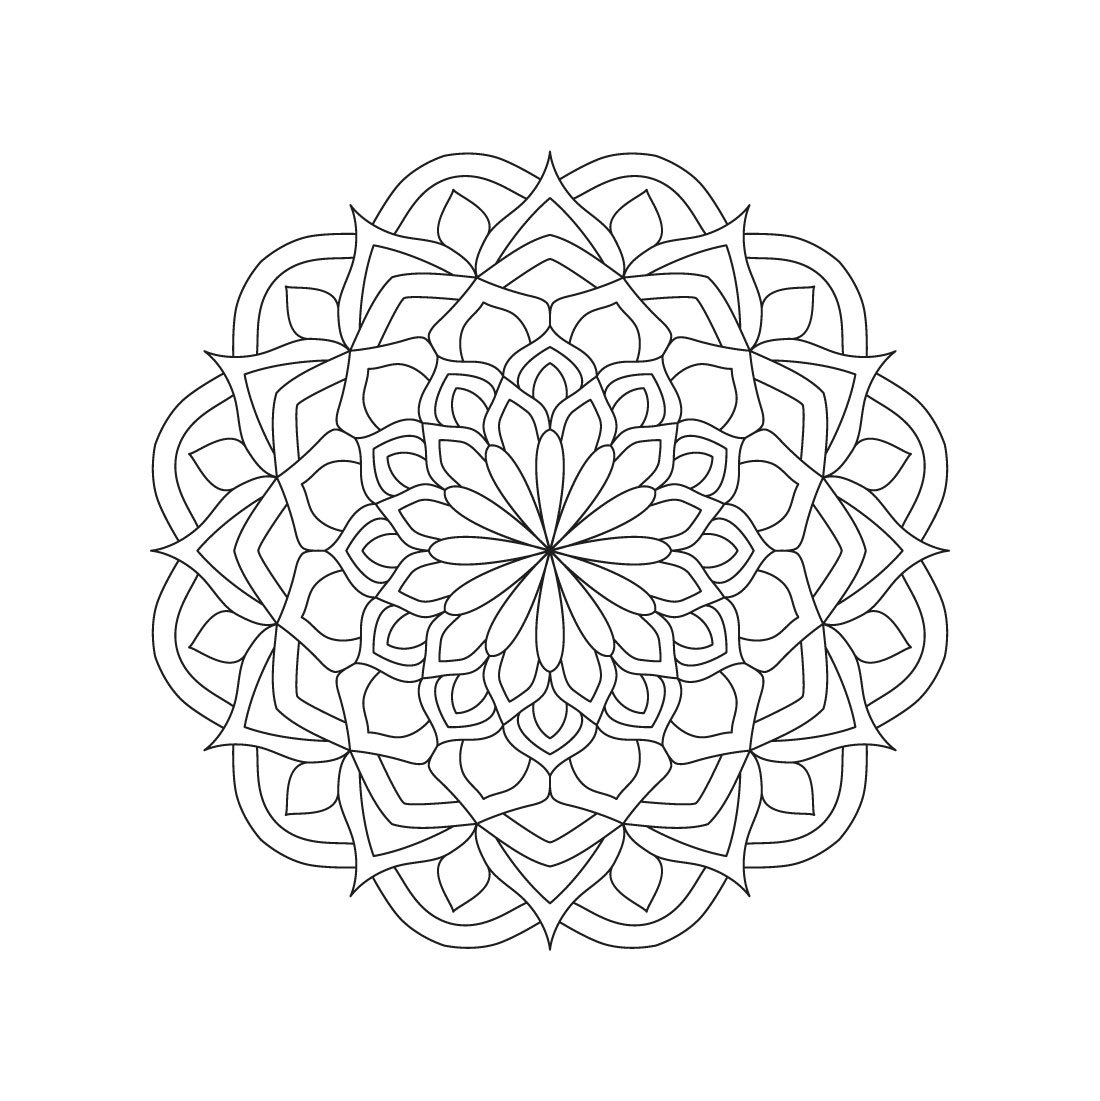 bundle of 10 peaceful patterns mandala coloring book pages 08 632